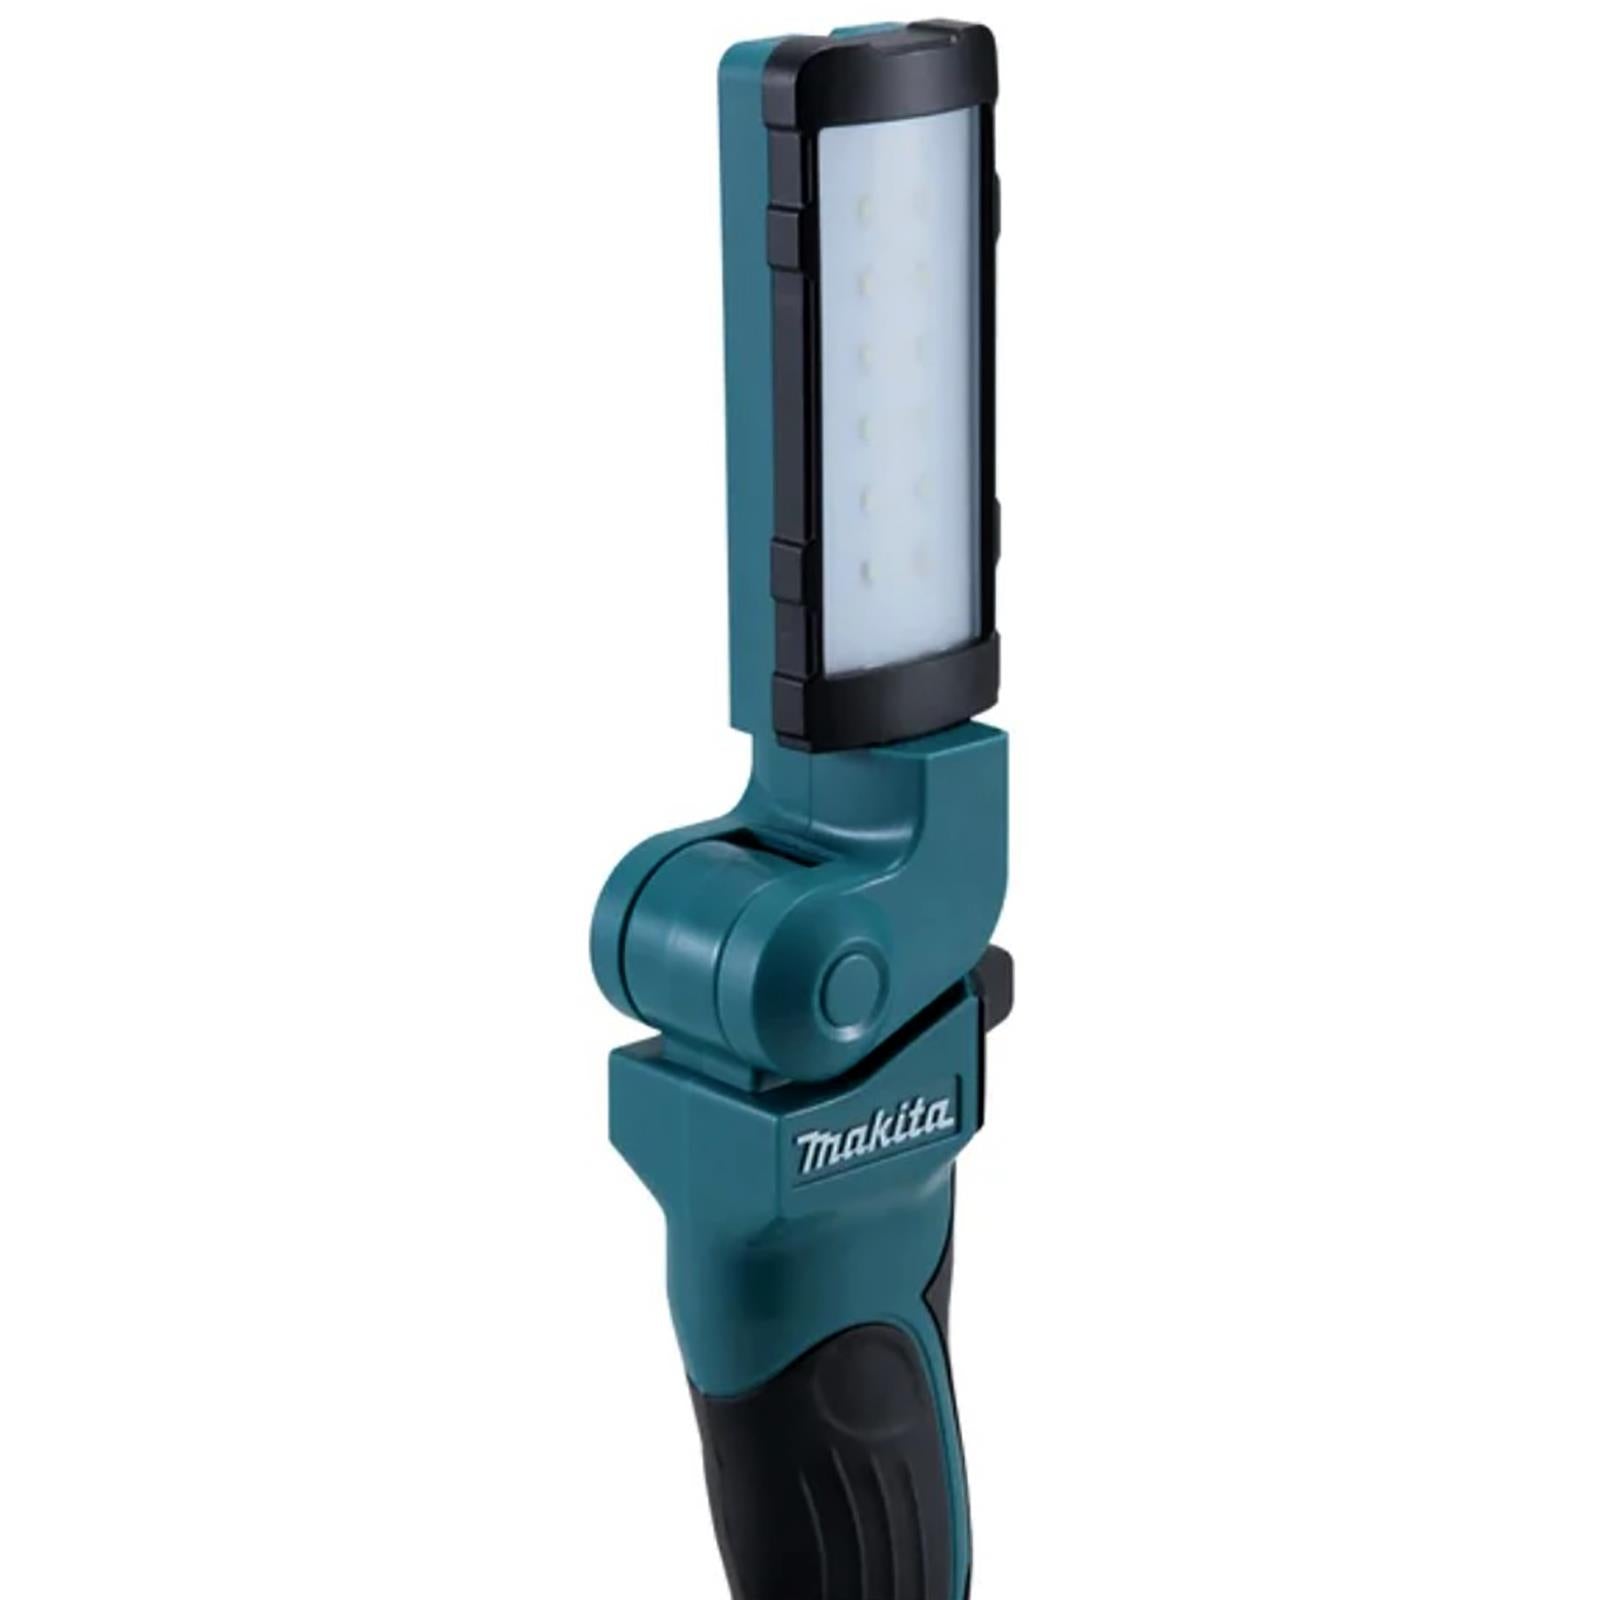 Makita LED Flashlight Torch 18V LXT Cordless 240 Lumens DML801 Body Only